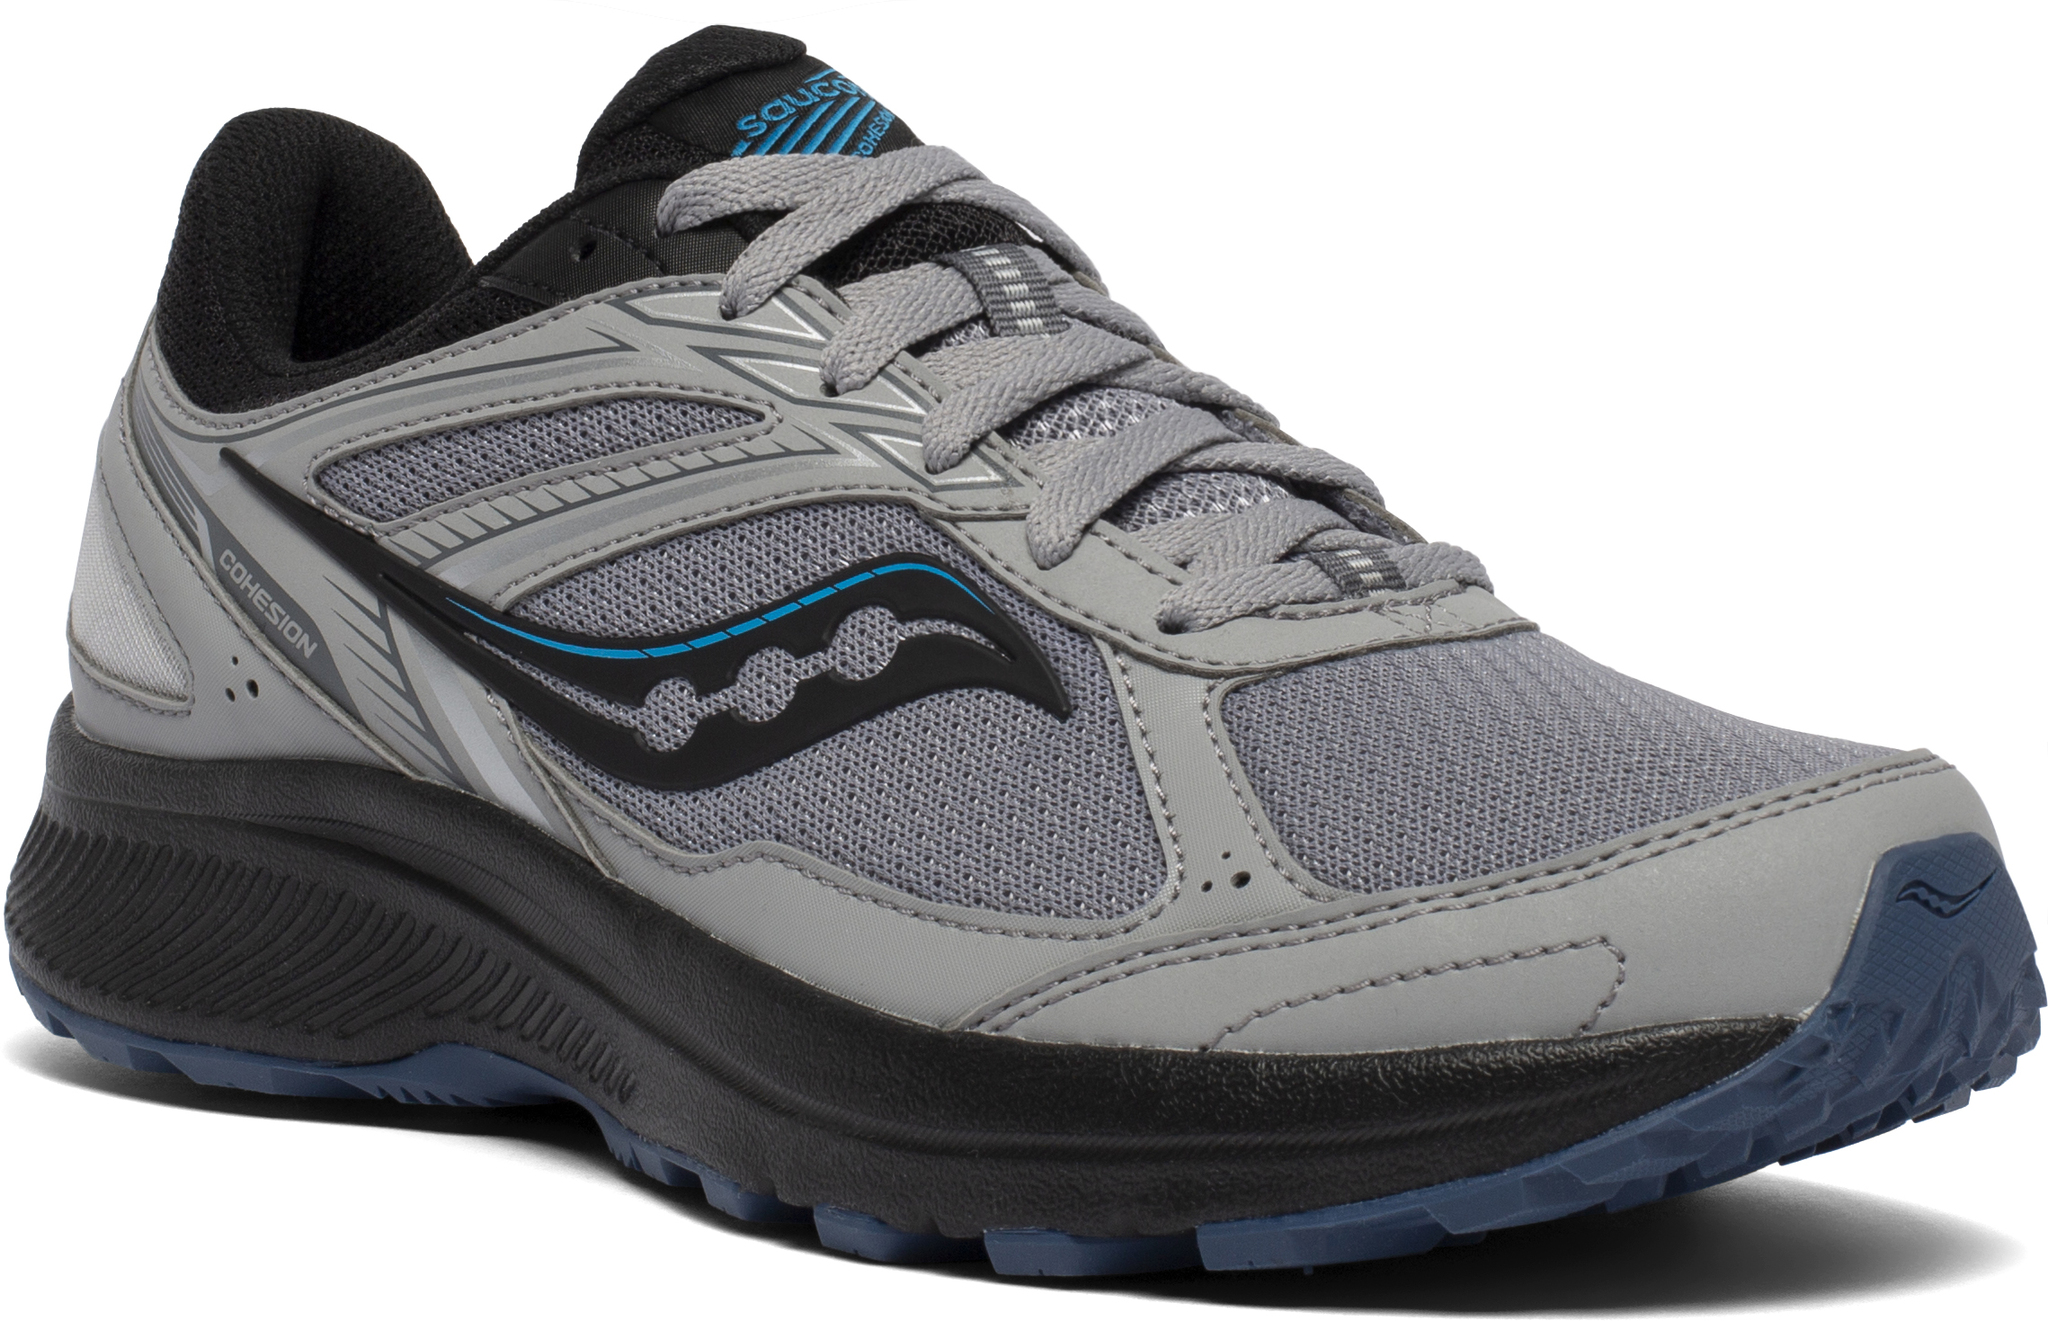 Saucony Men's COHESION TR14 Trail Running Shoe - Alloy/Cobalt